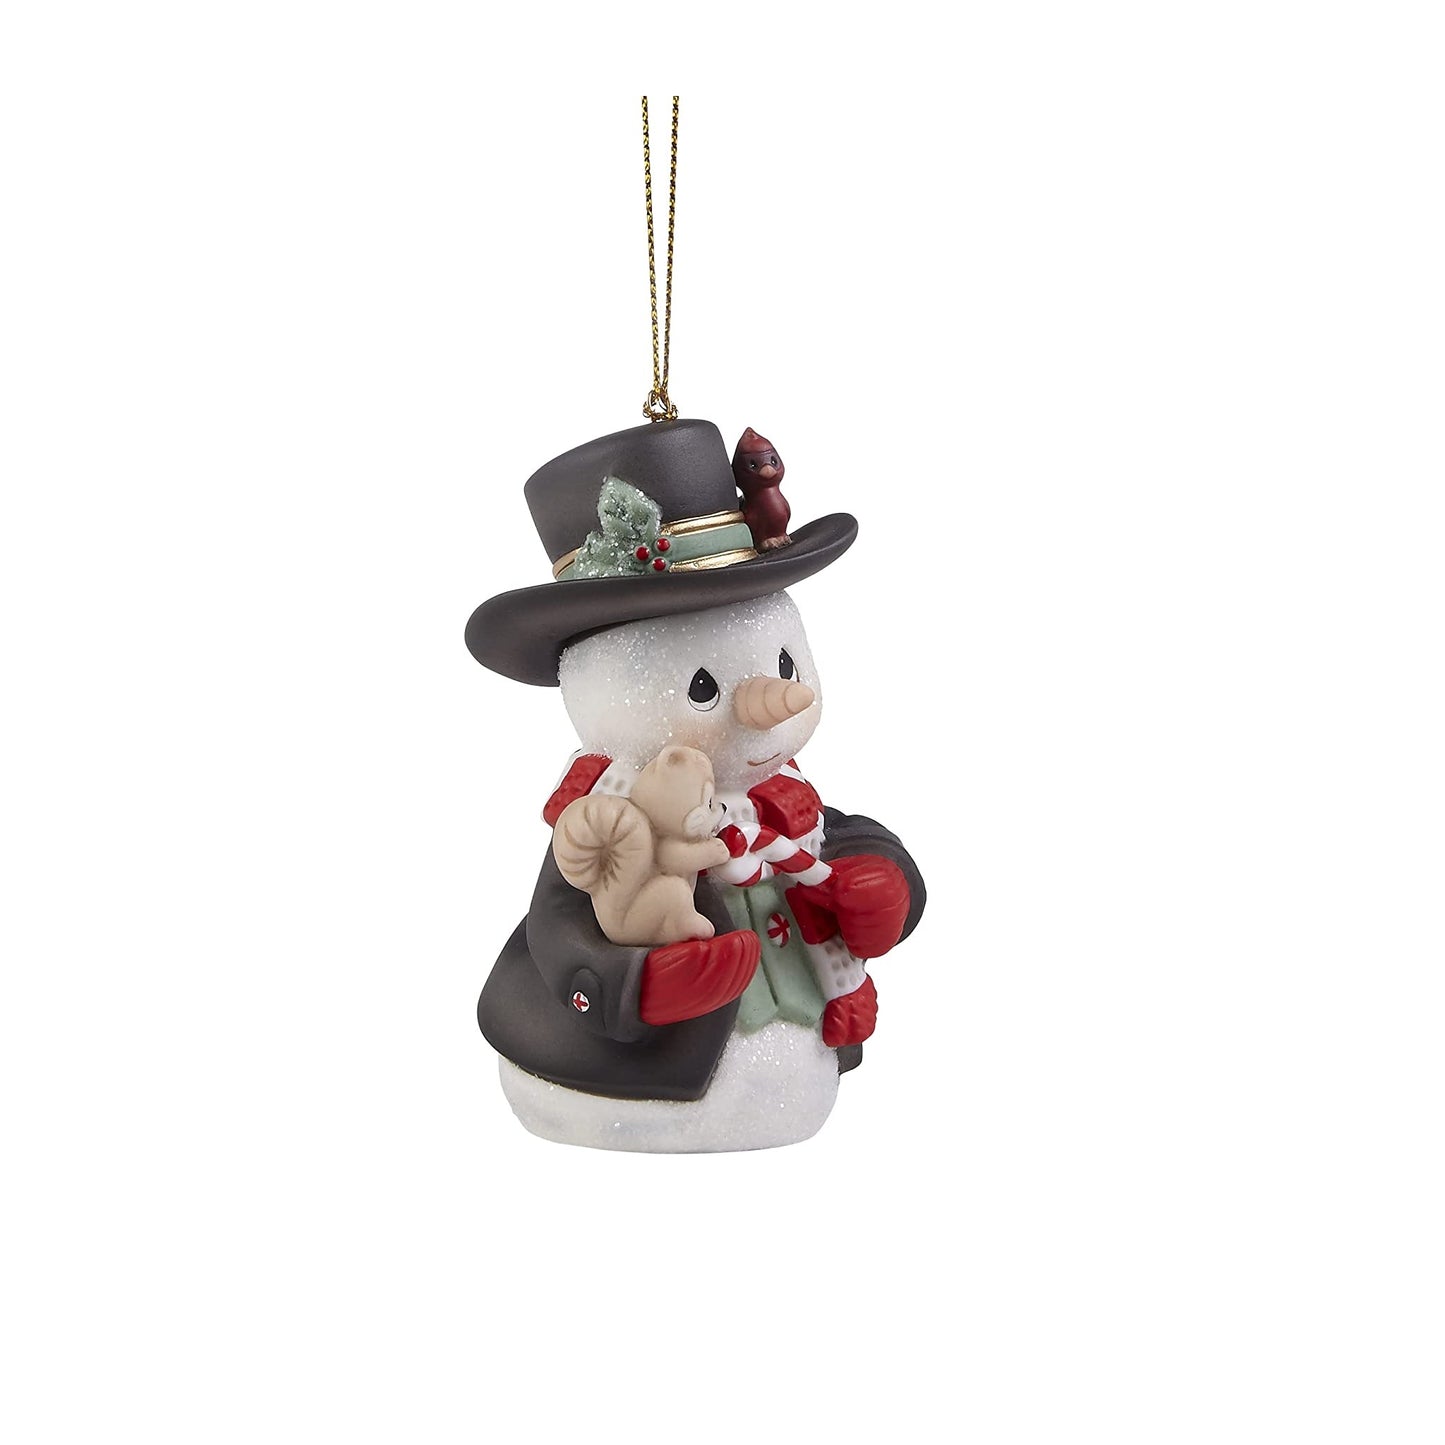 Wishing You A Sweet Season Annual Snowman Ornament